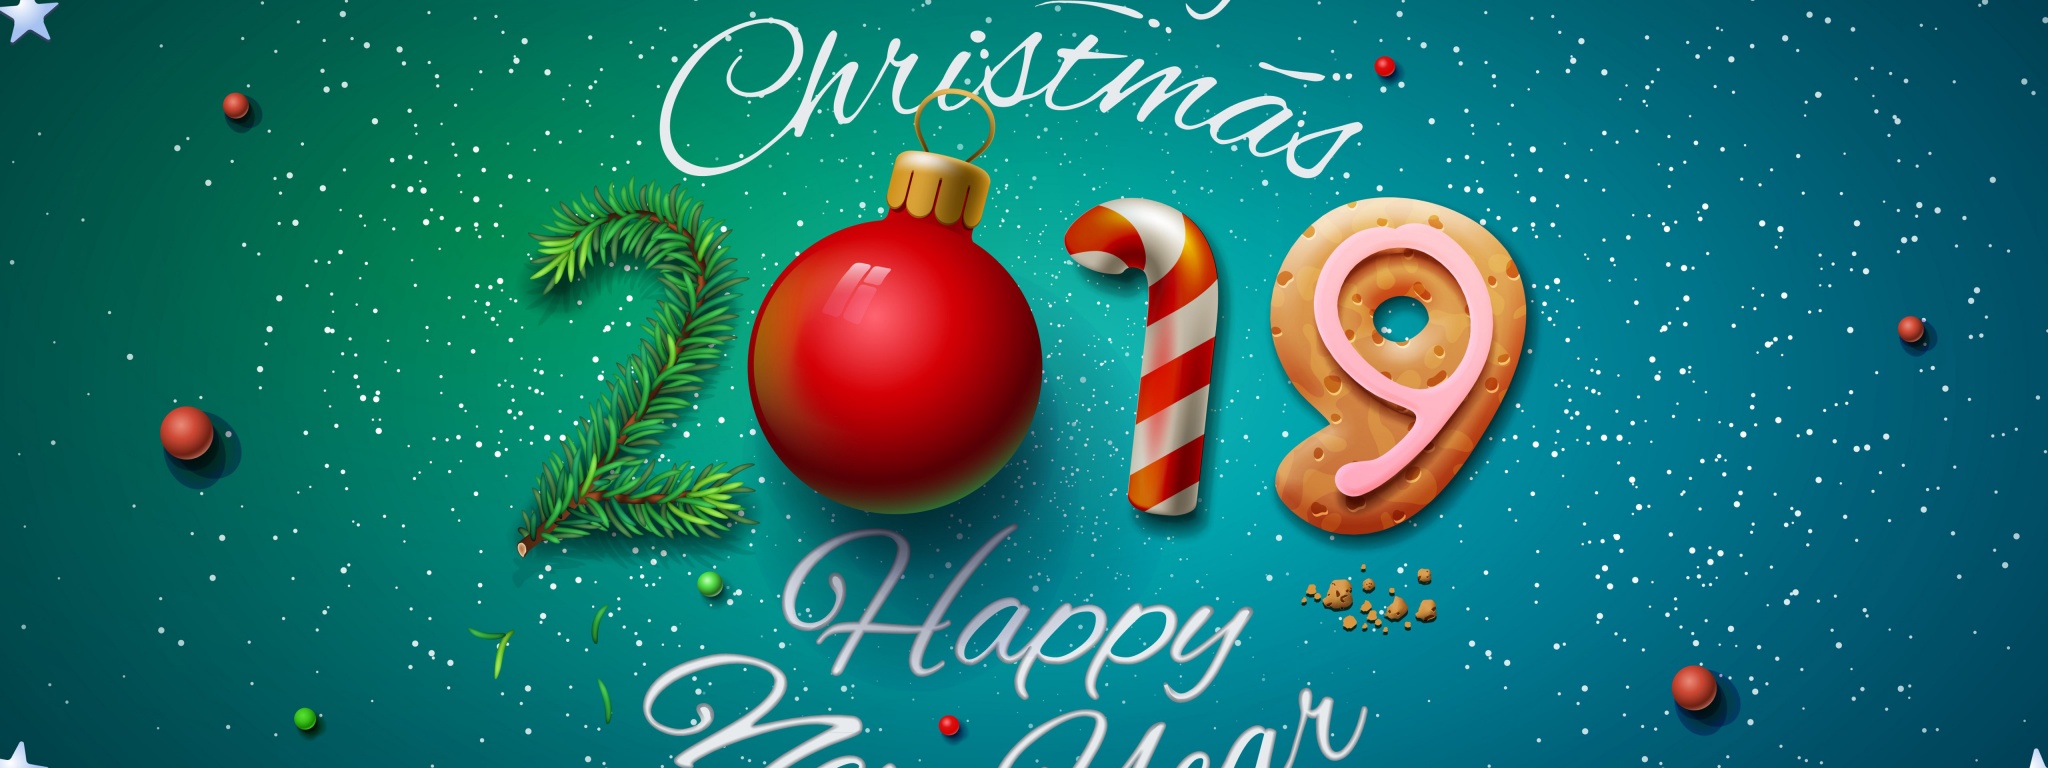 Merry Christmas Happy New Year 2019